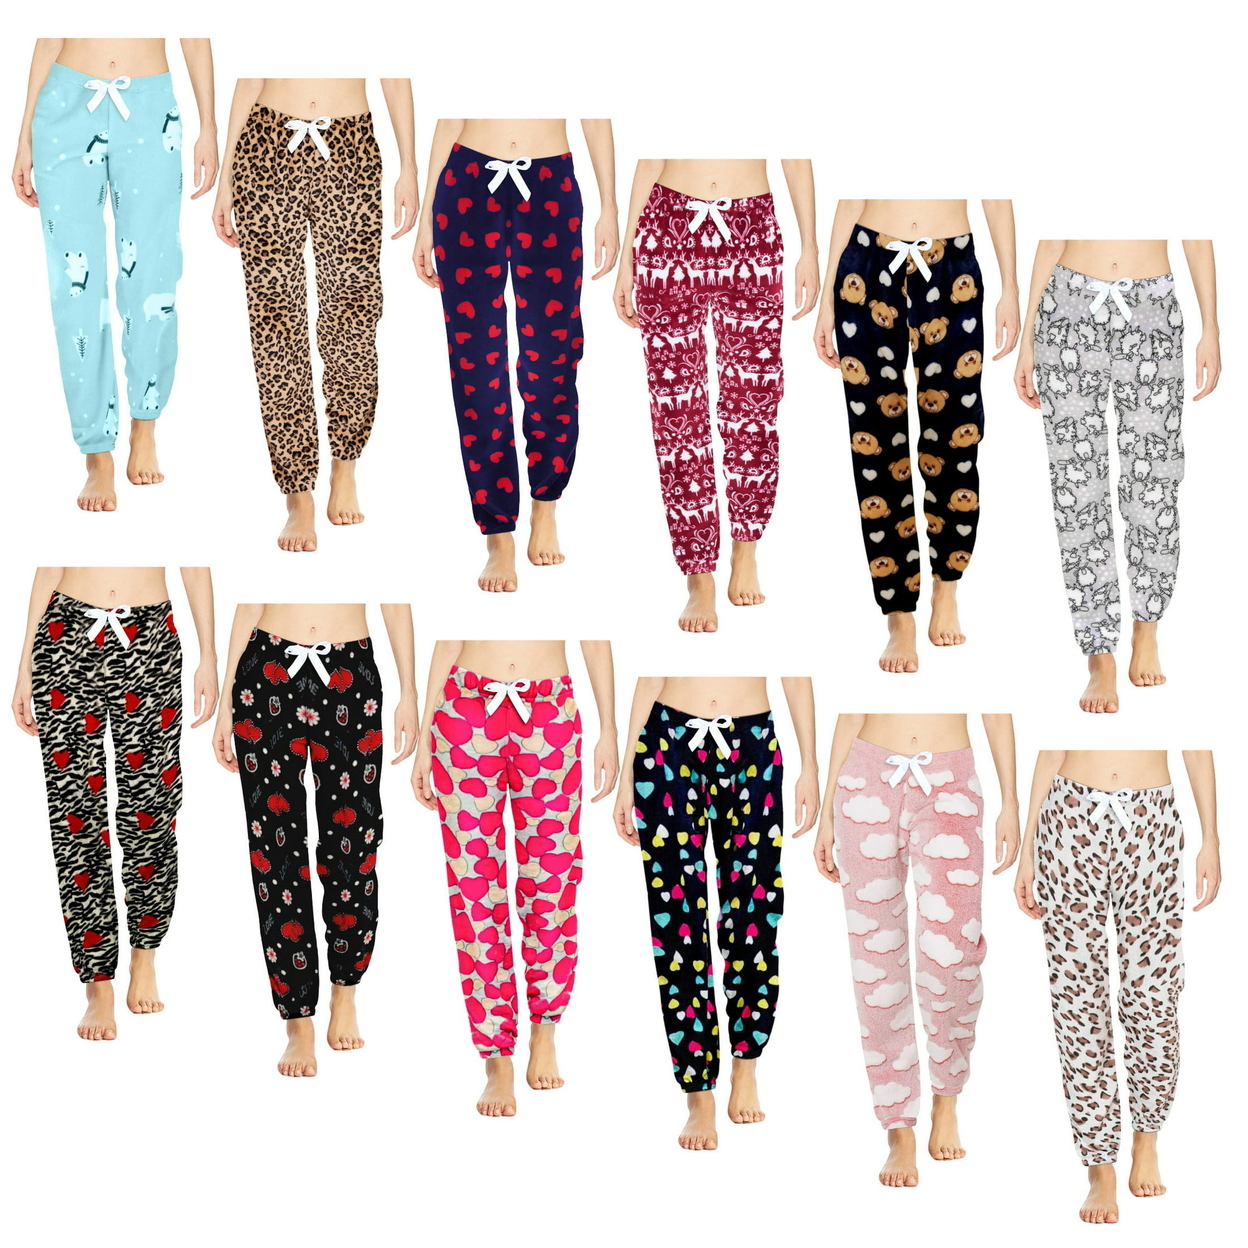 3-Pack: Women's Printed Ultra-Soft Comfy Stretch Micro-Fleece Pajama Lounge Pants - Xx-large, Animal